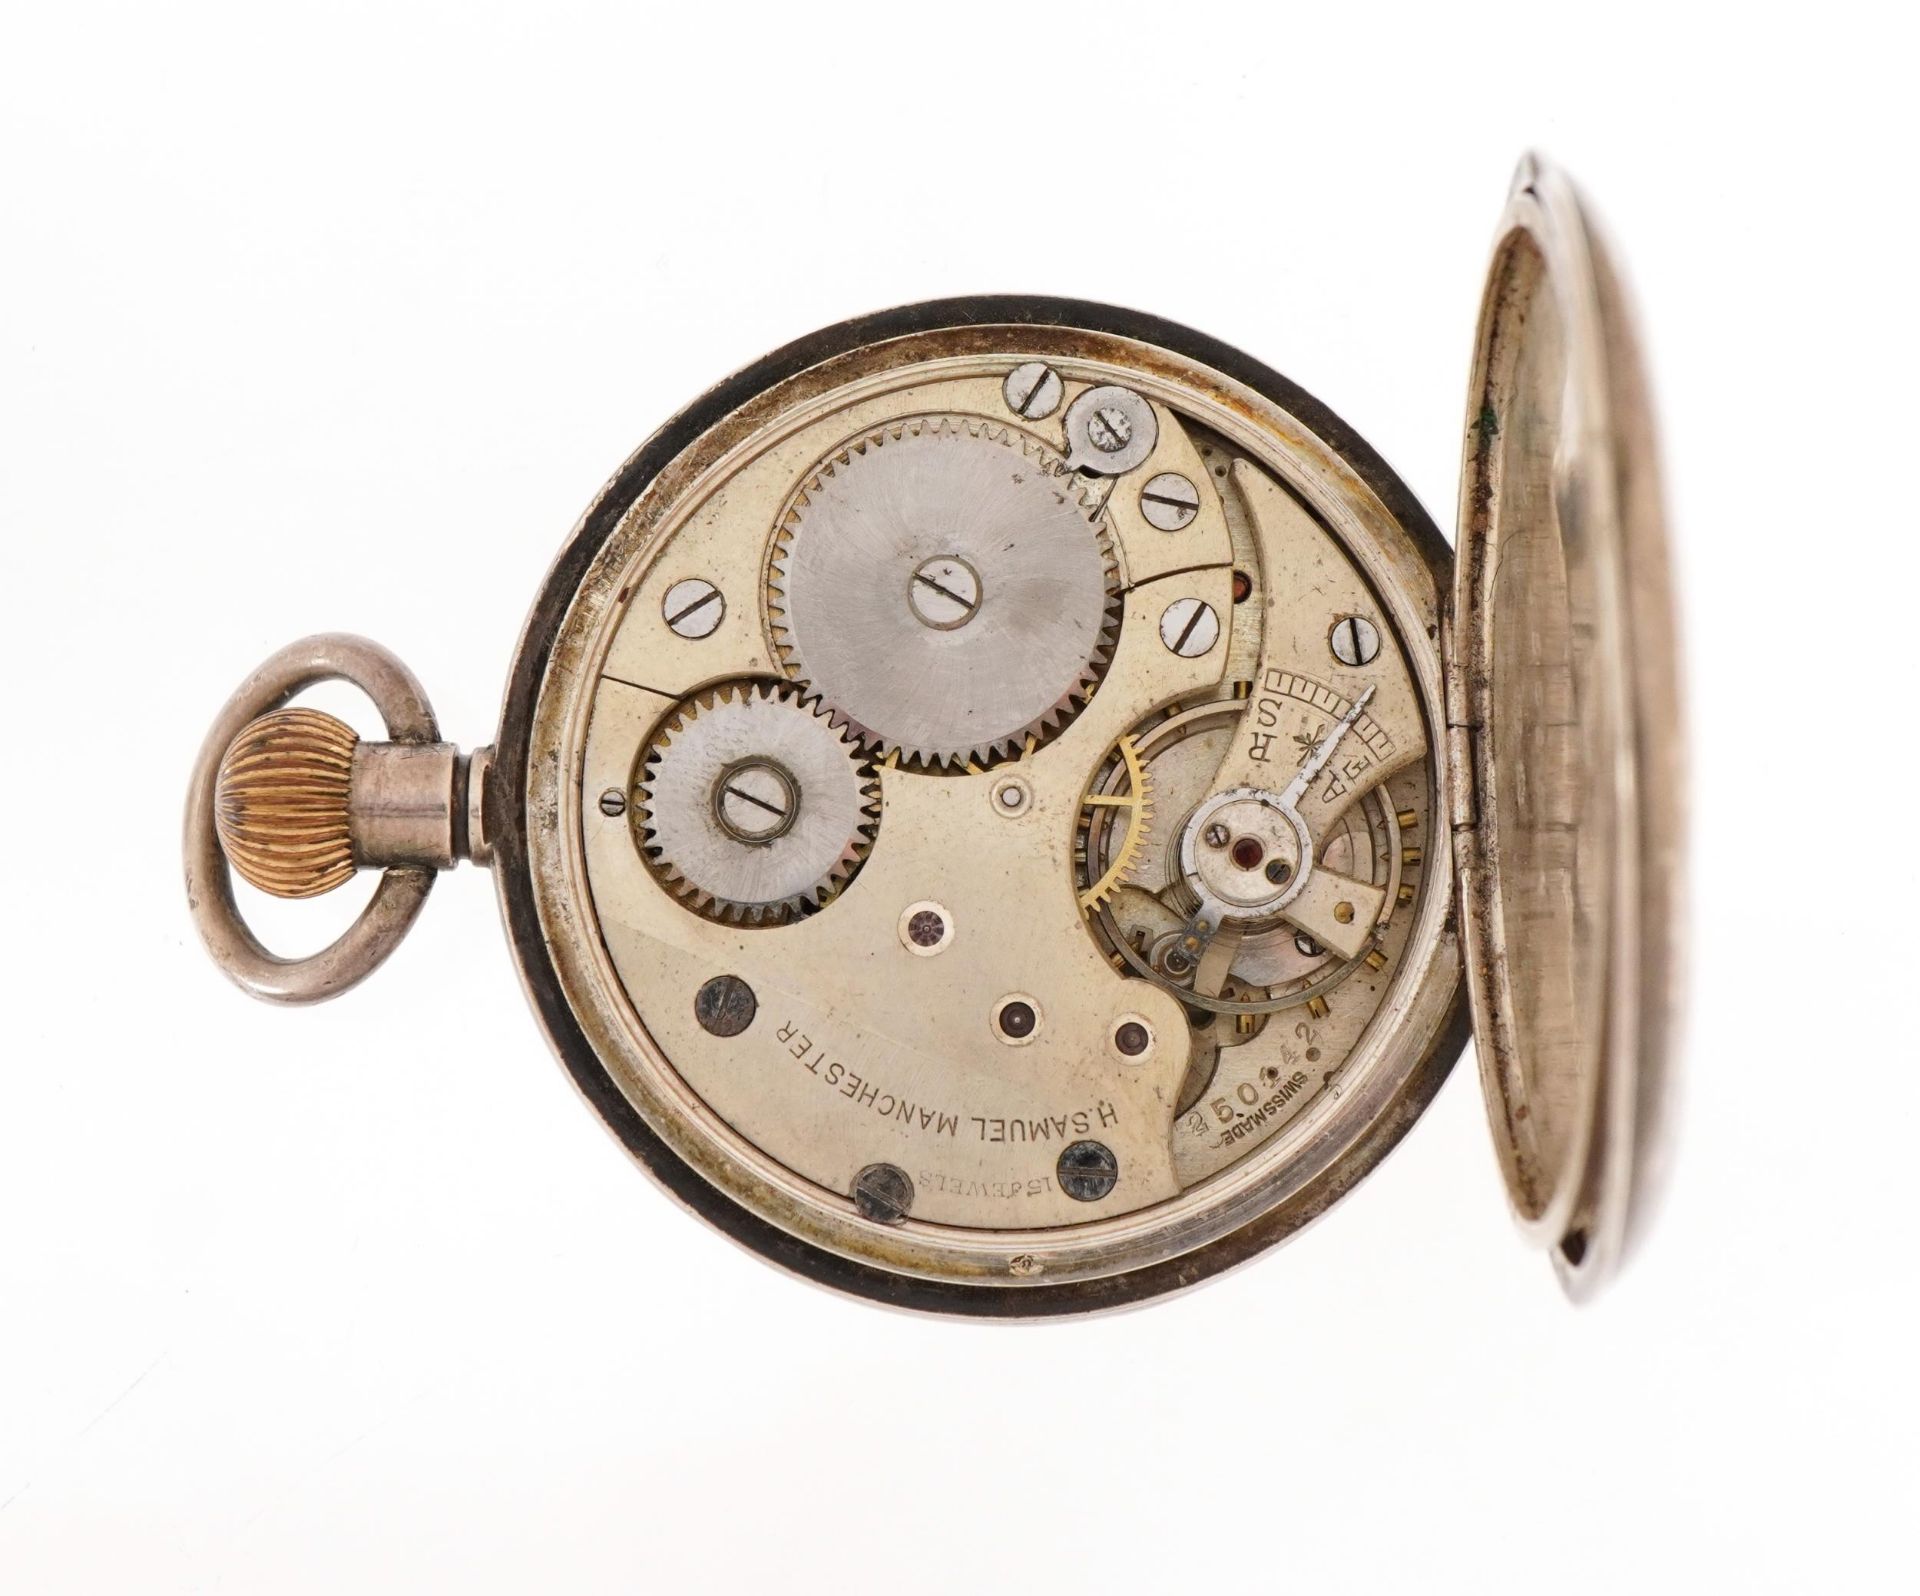 H Samuel, gentlemen's silver half hunter pocket watch, the case numbered 569654, London import - Image 4 of 6